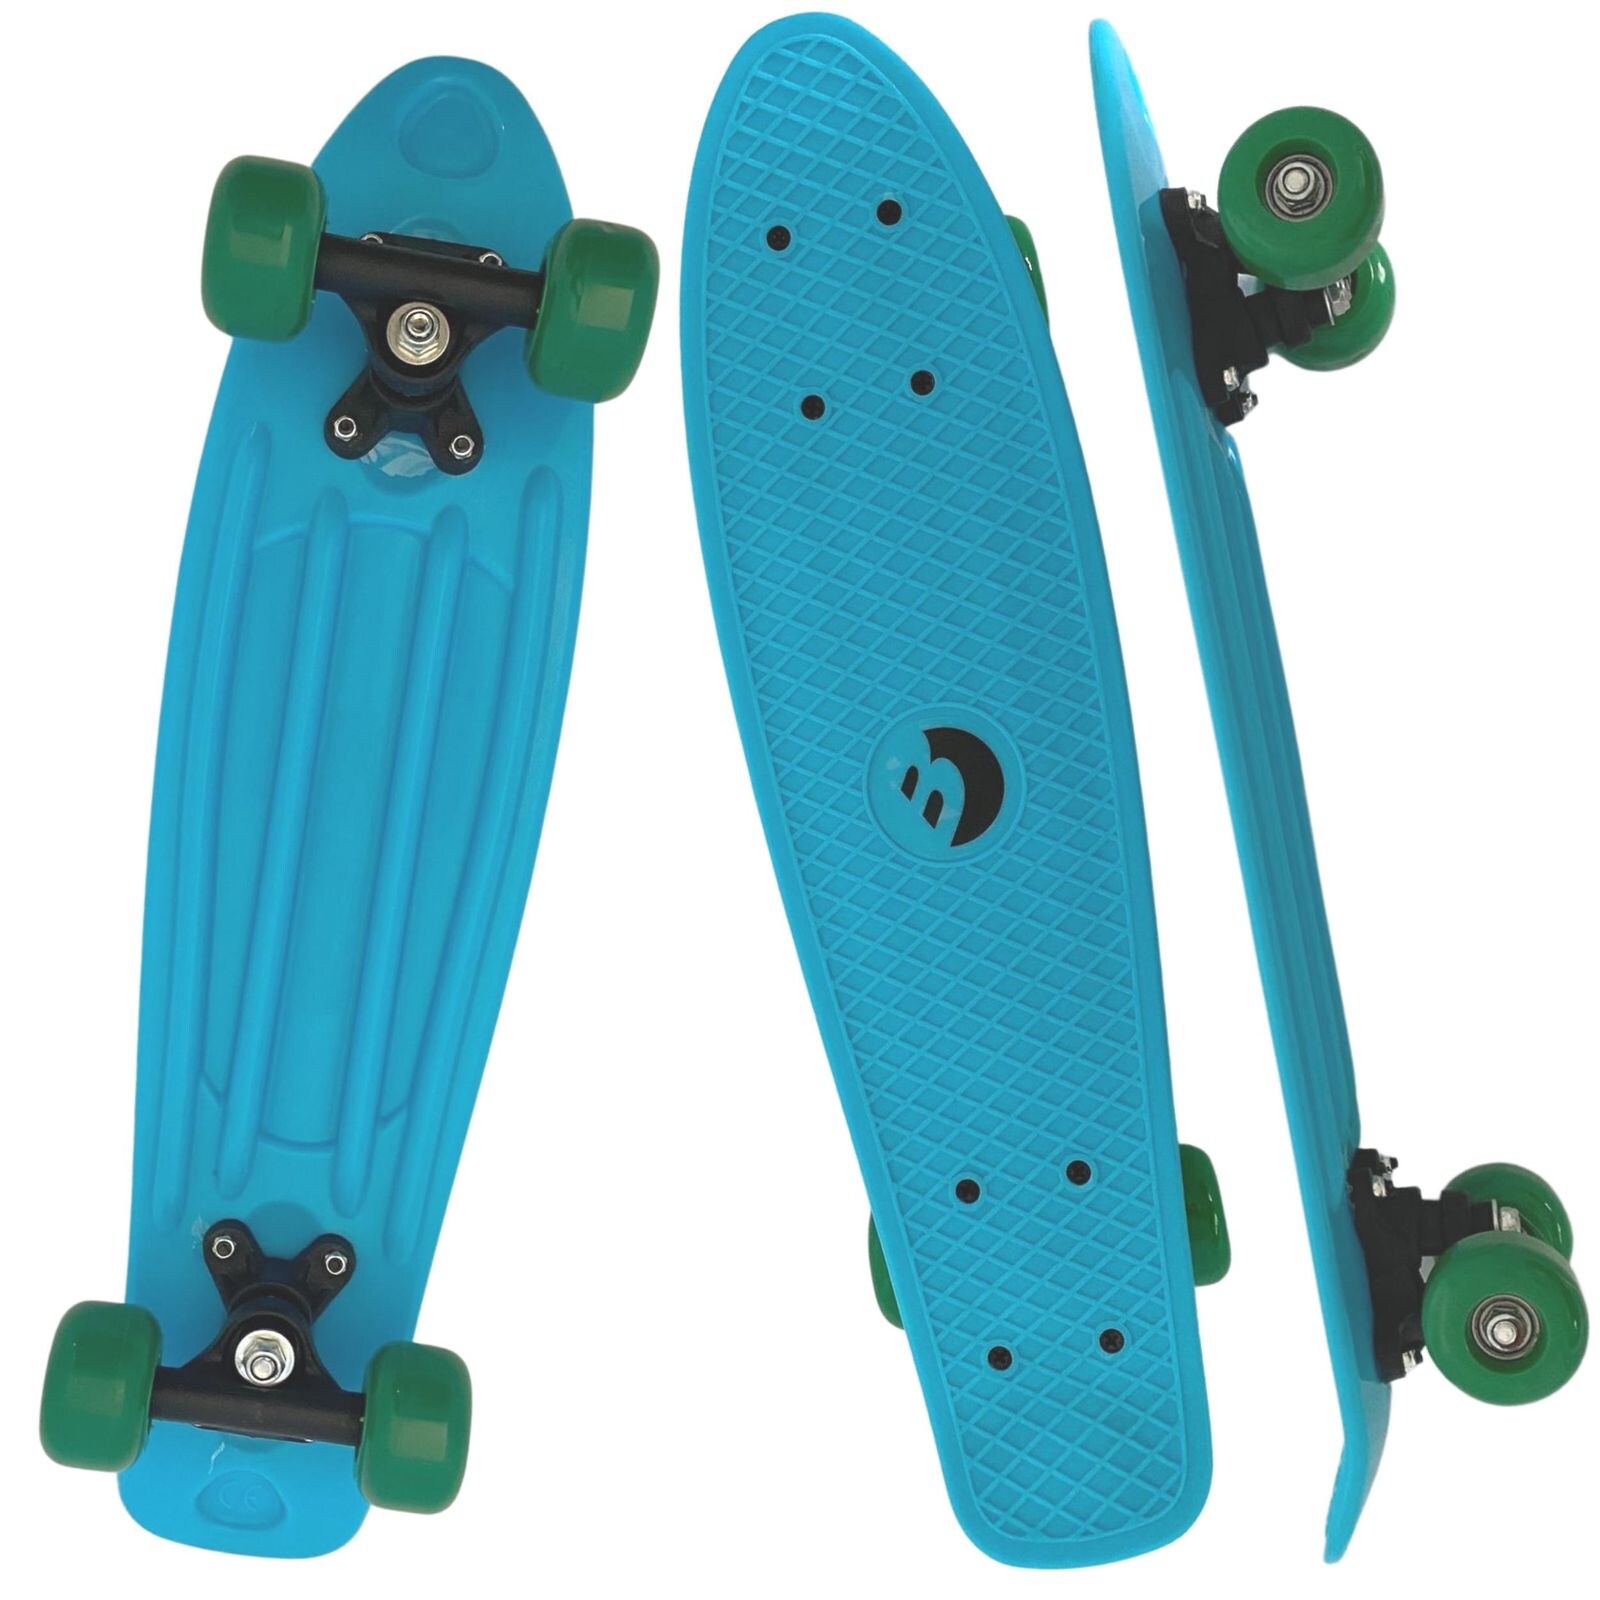 PP Skateboard - blau